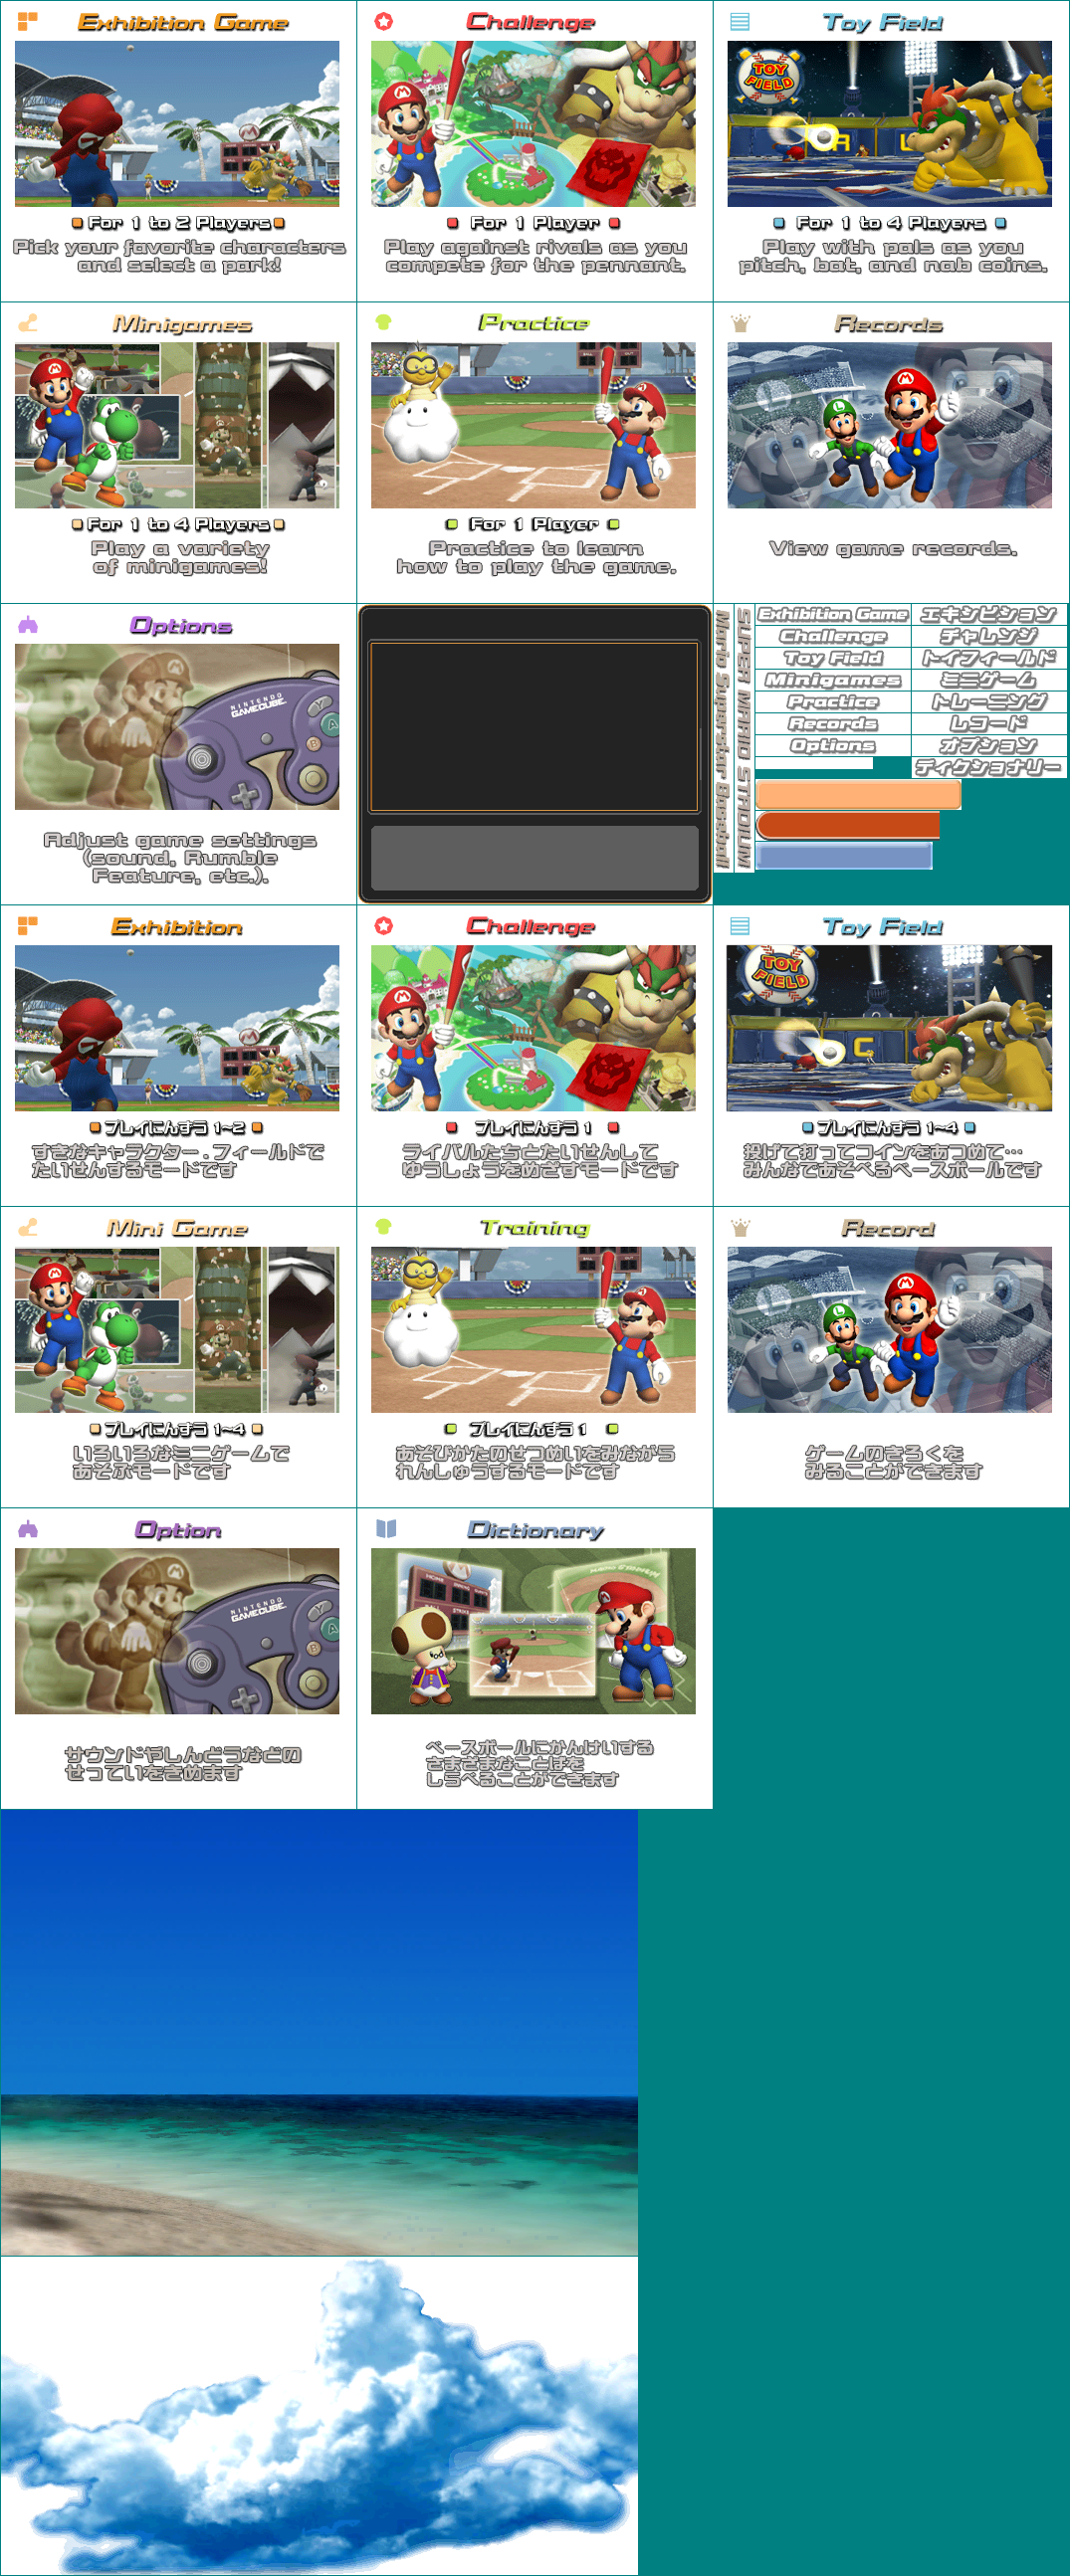 Mario Superstar Baseball - Main Menu